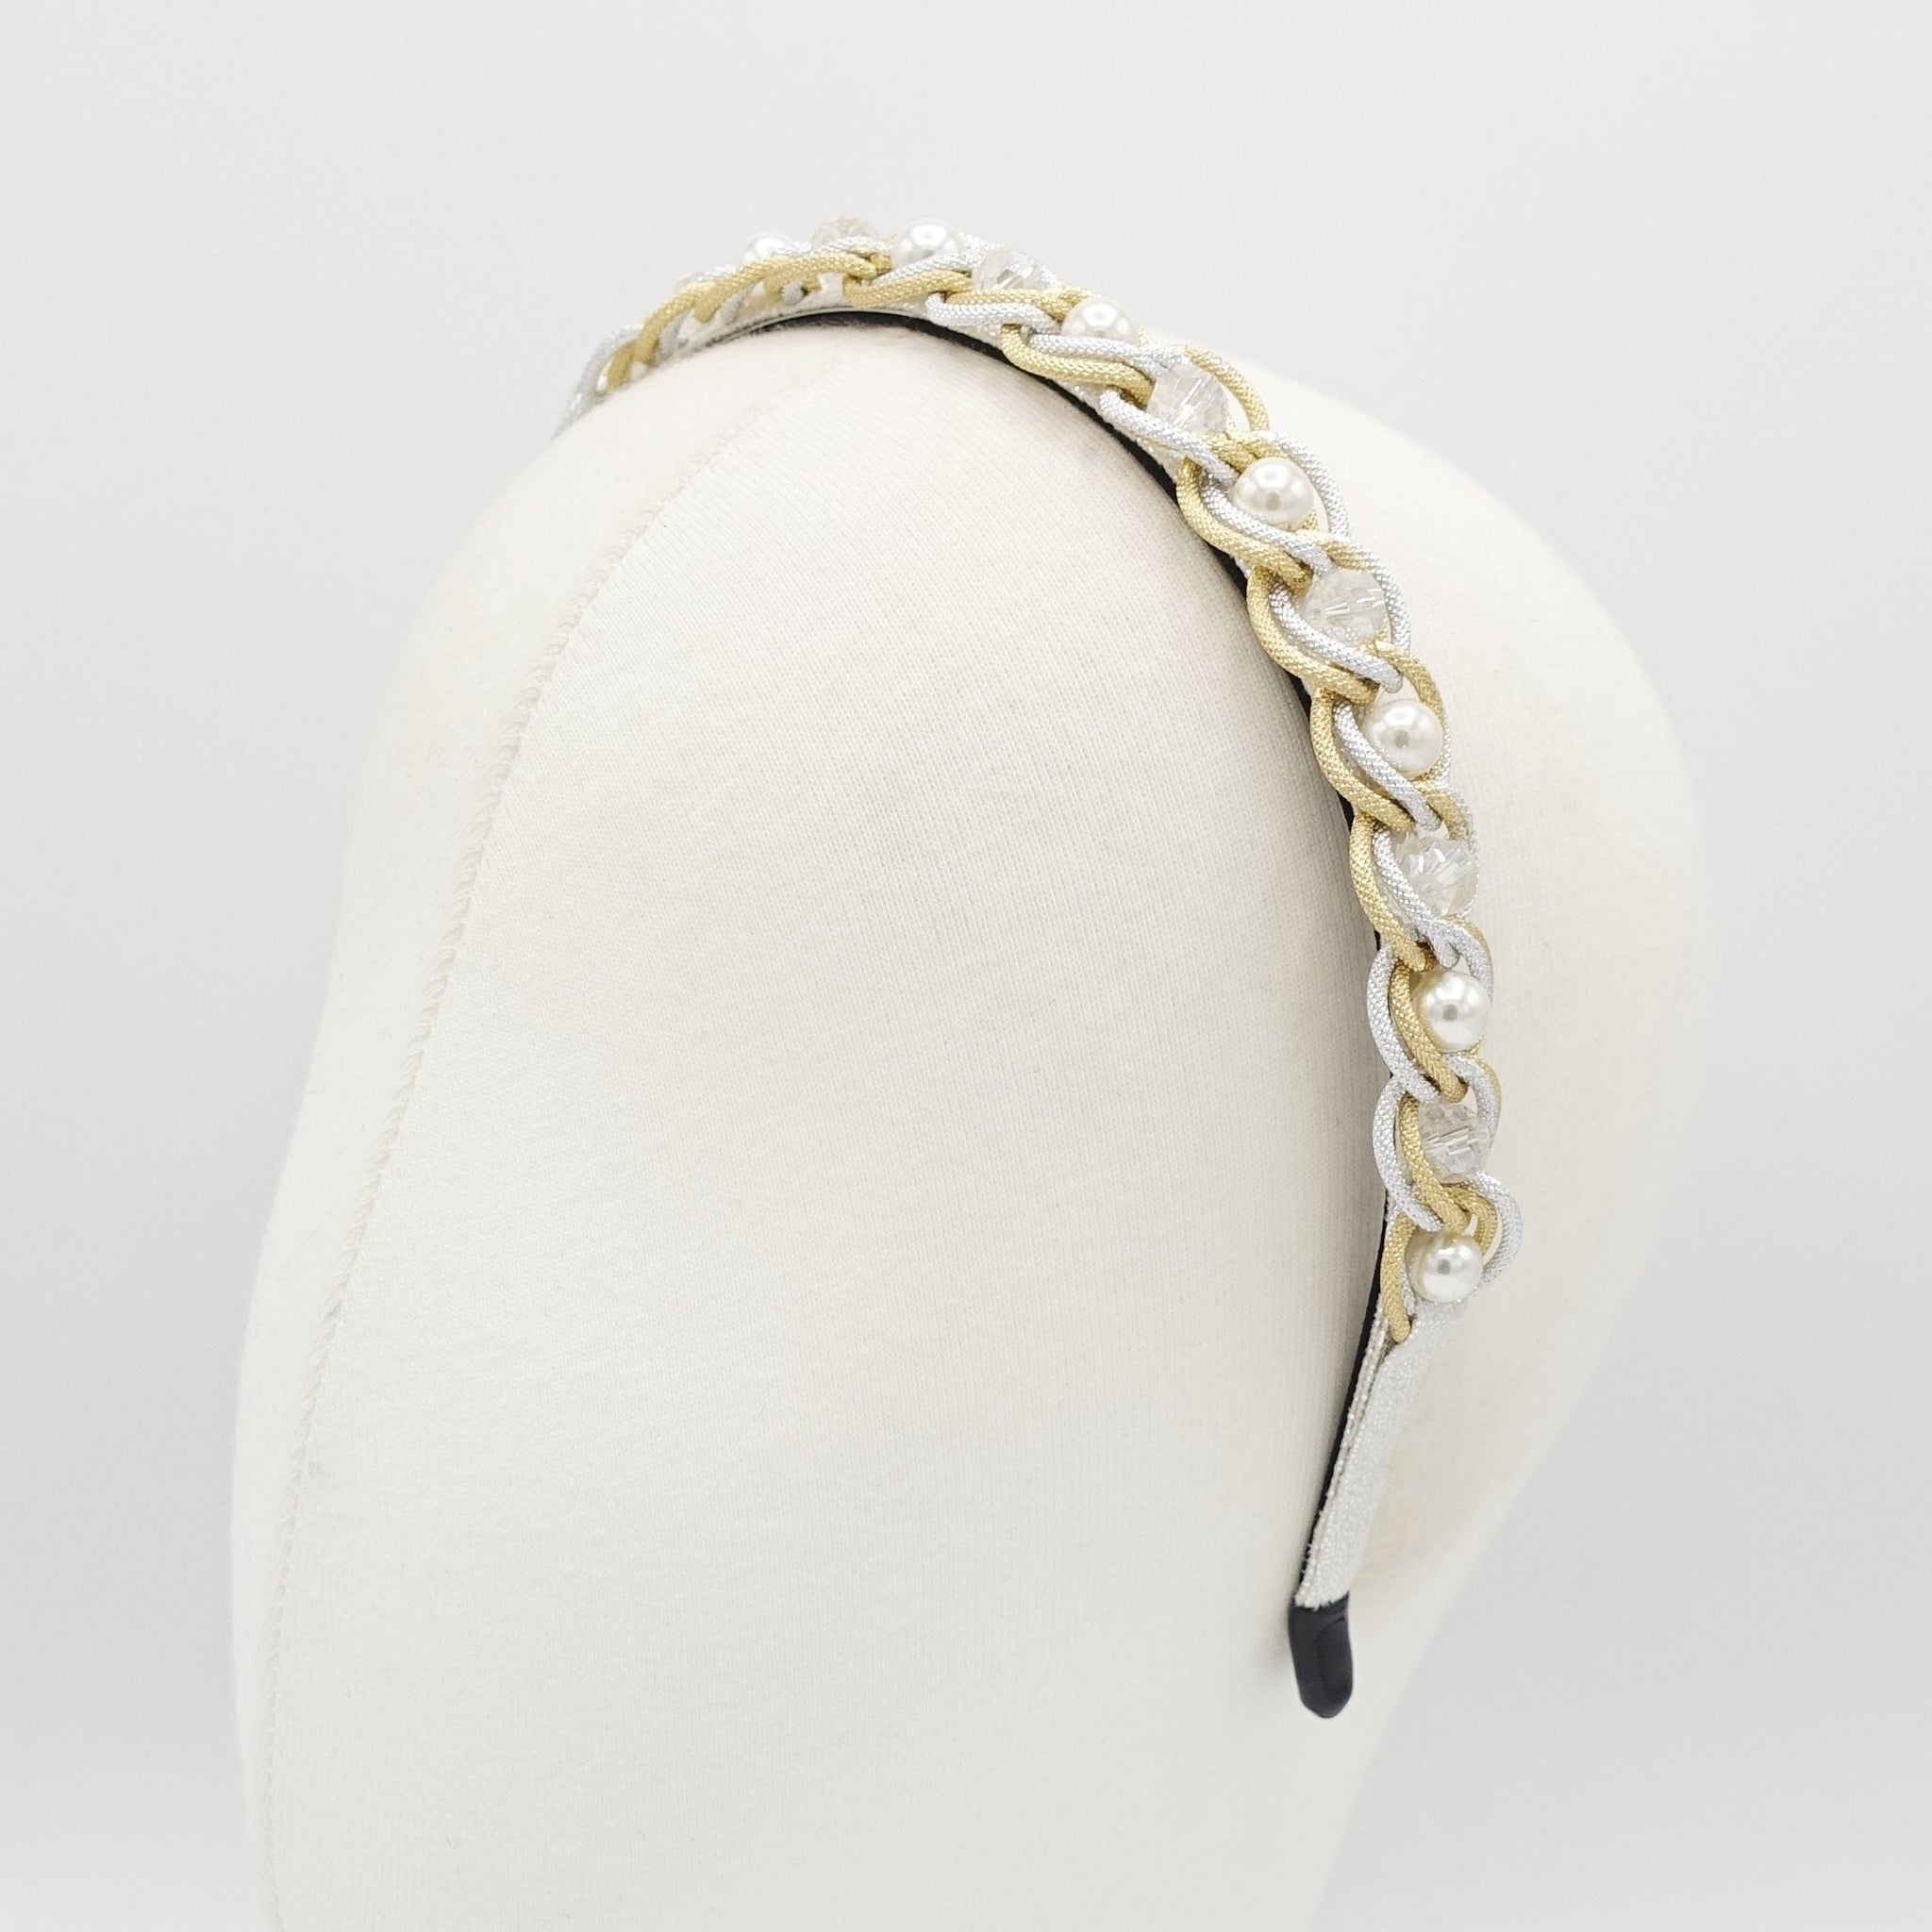 veryshine.com Headband Clear pearl glass beads embellished chain headband thin hairband hair accessory for women